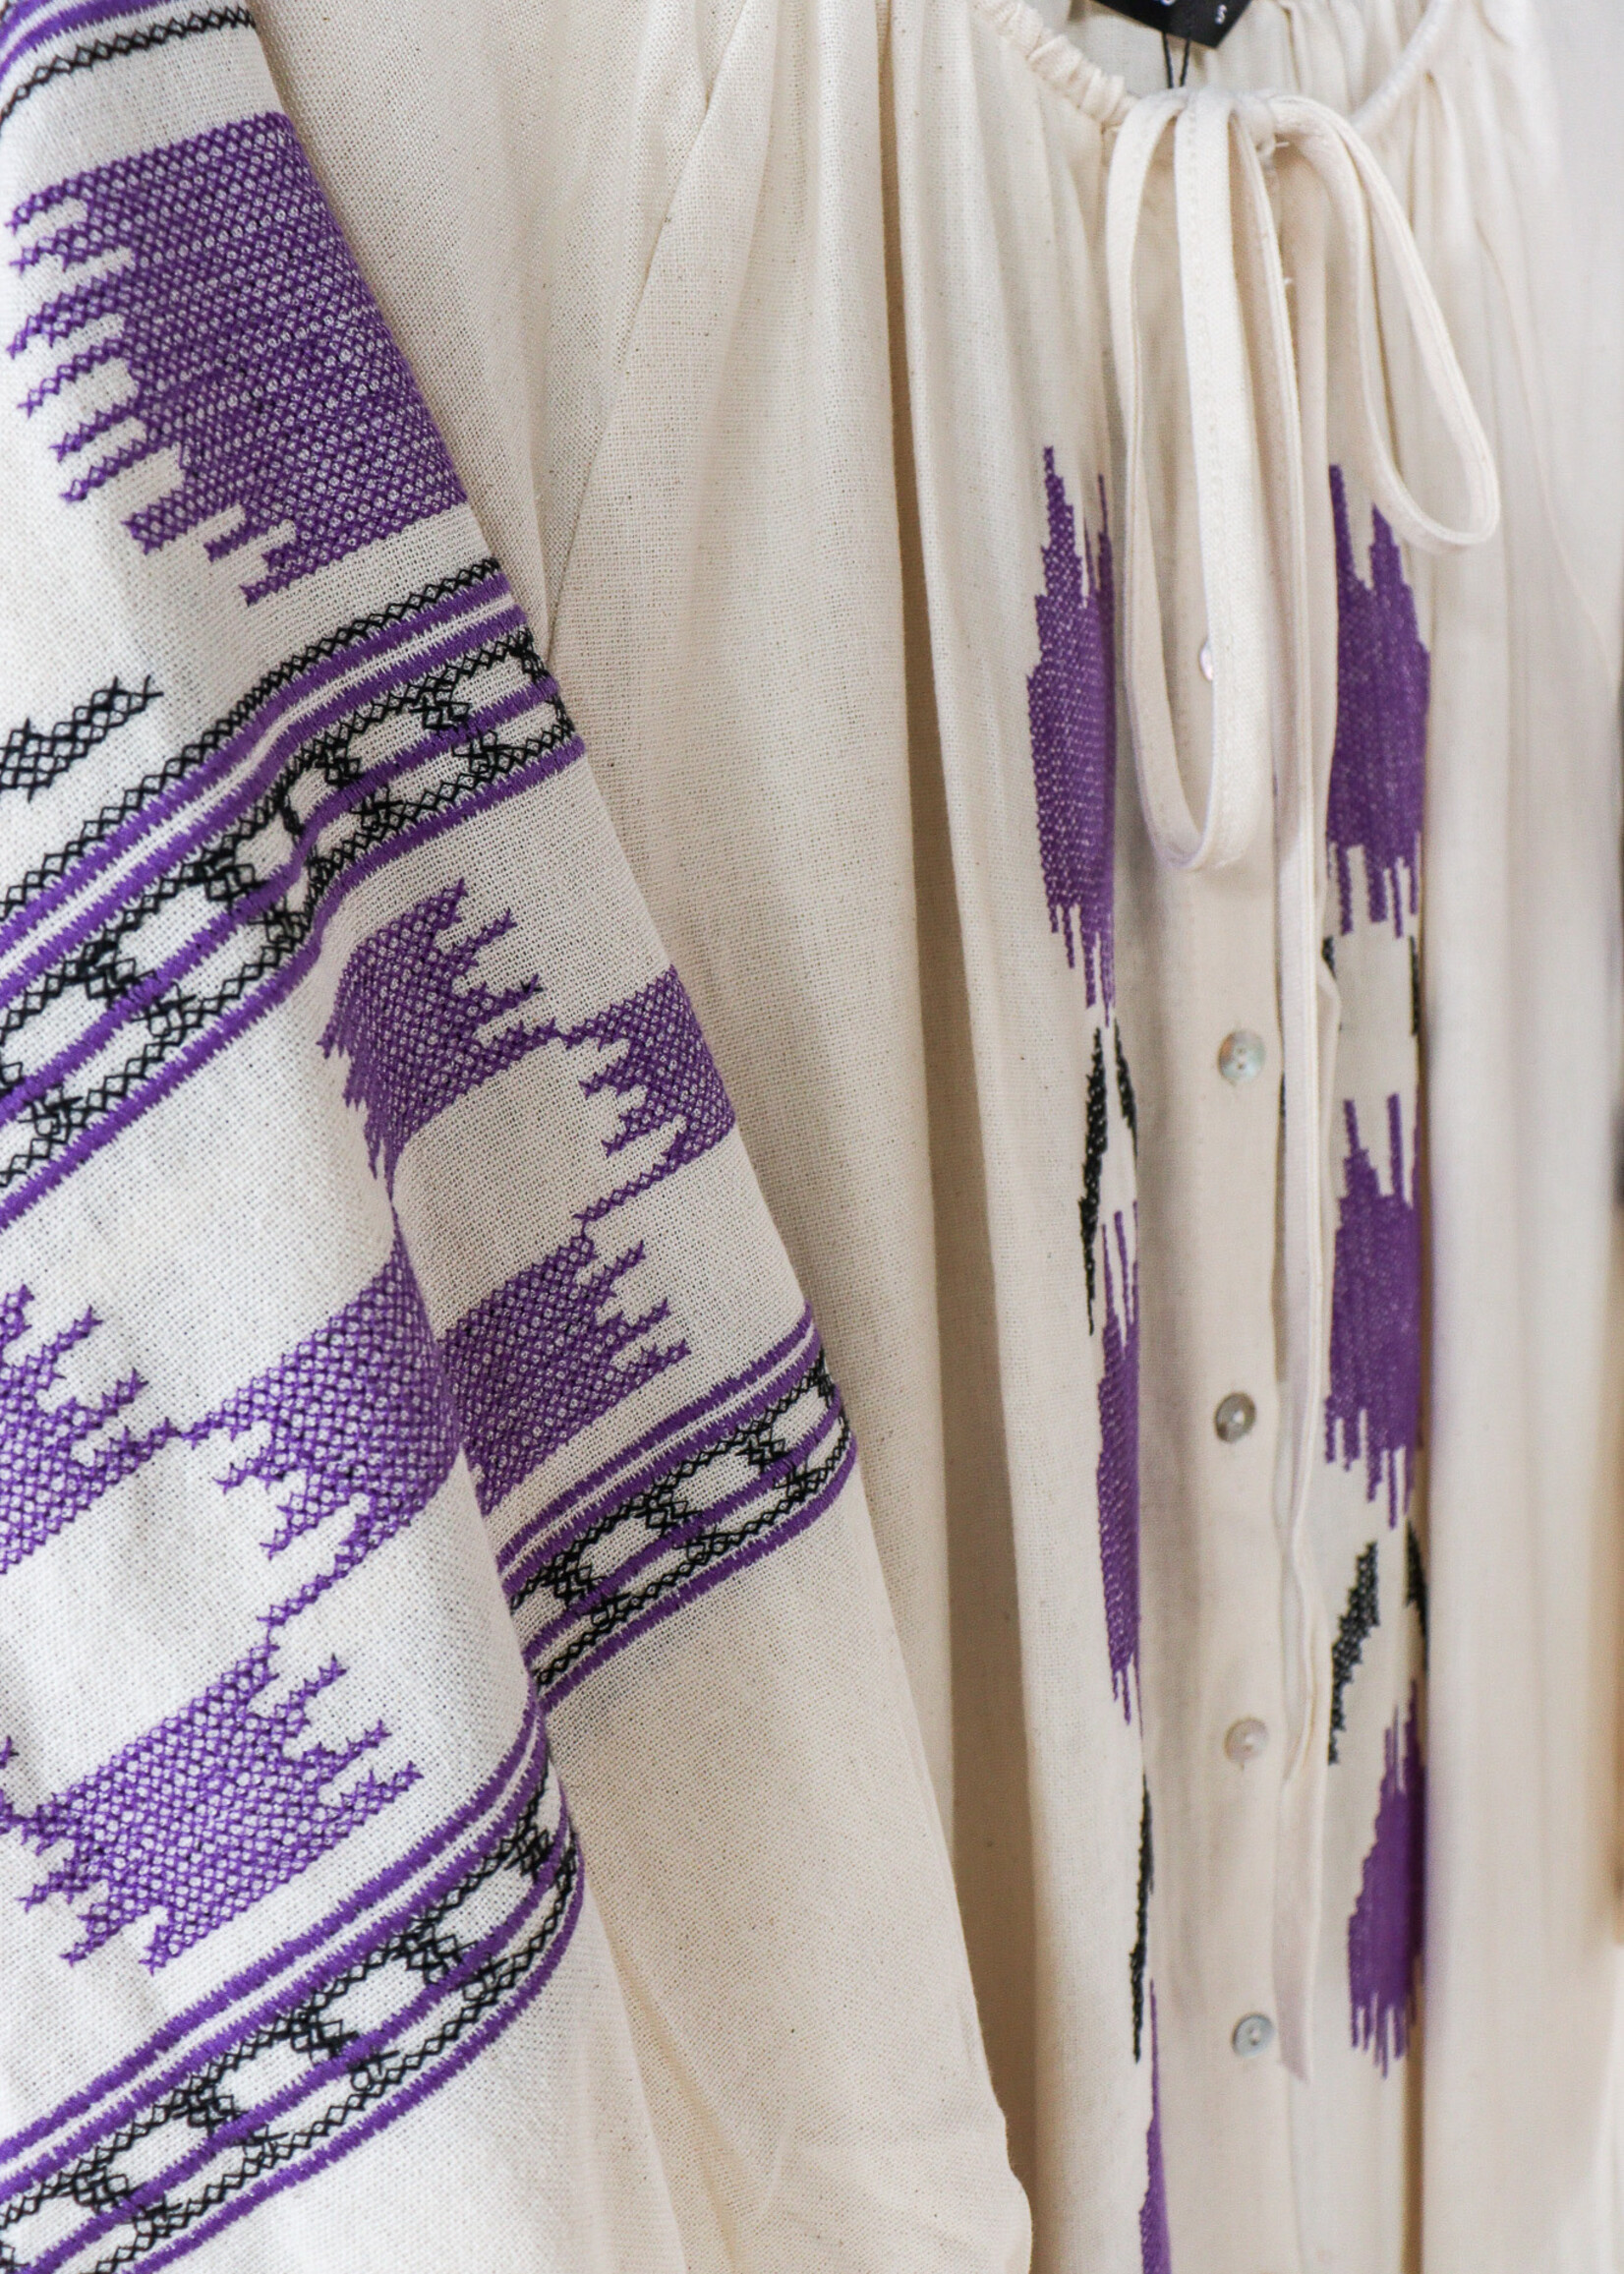 APPAREL -(W) Dress Long ( size Small) Cream & Purple Embroidery